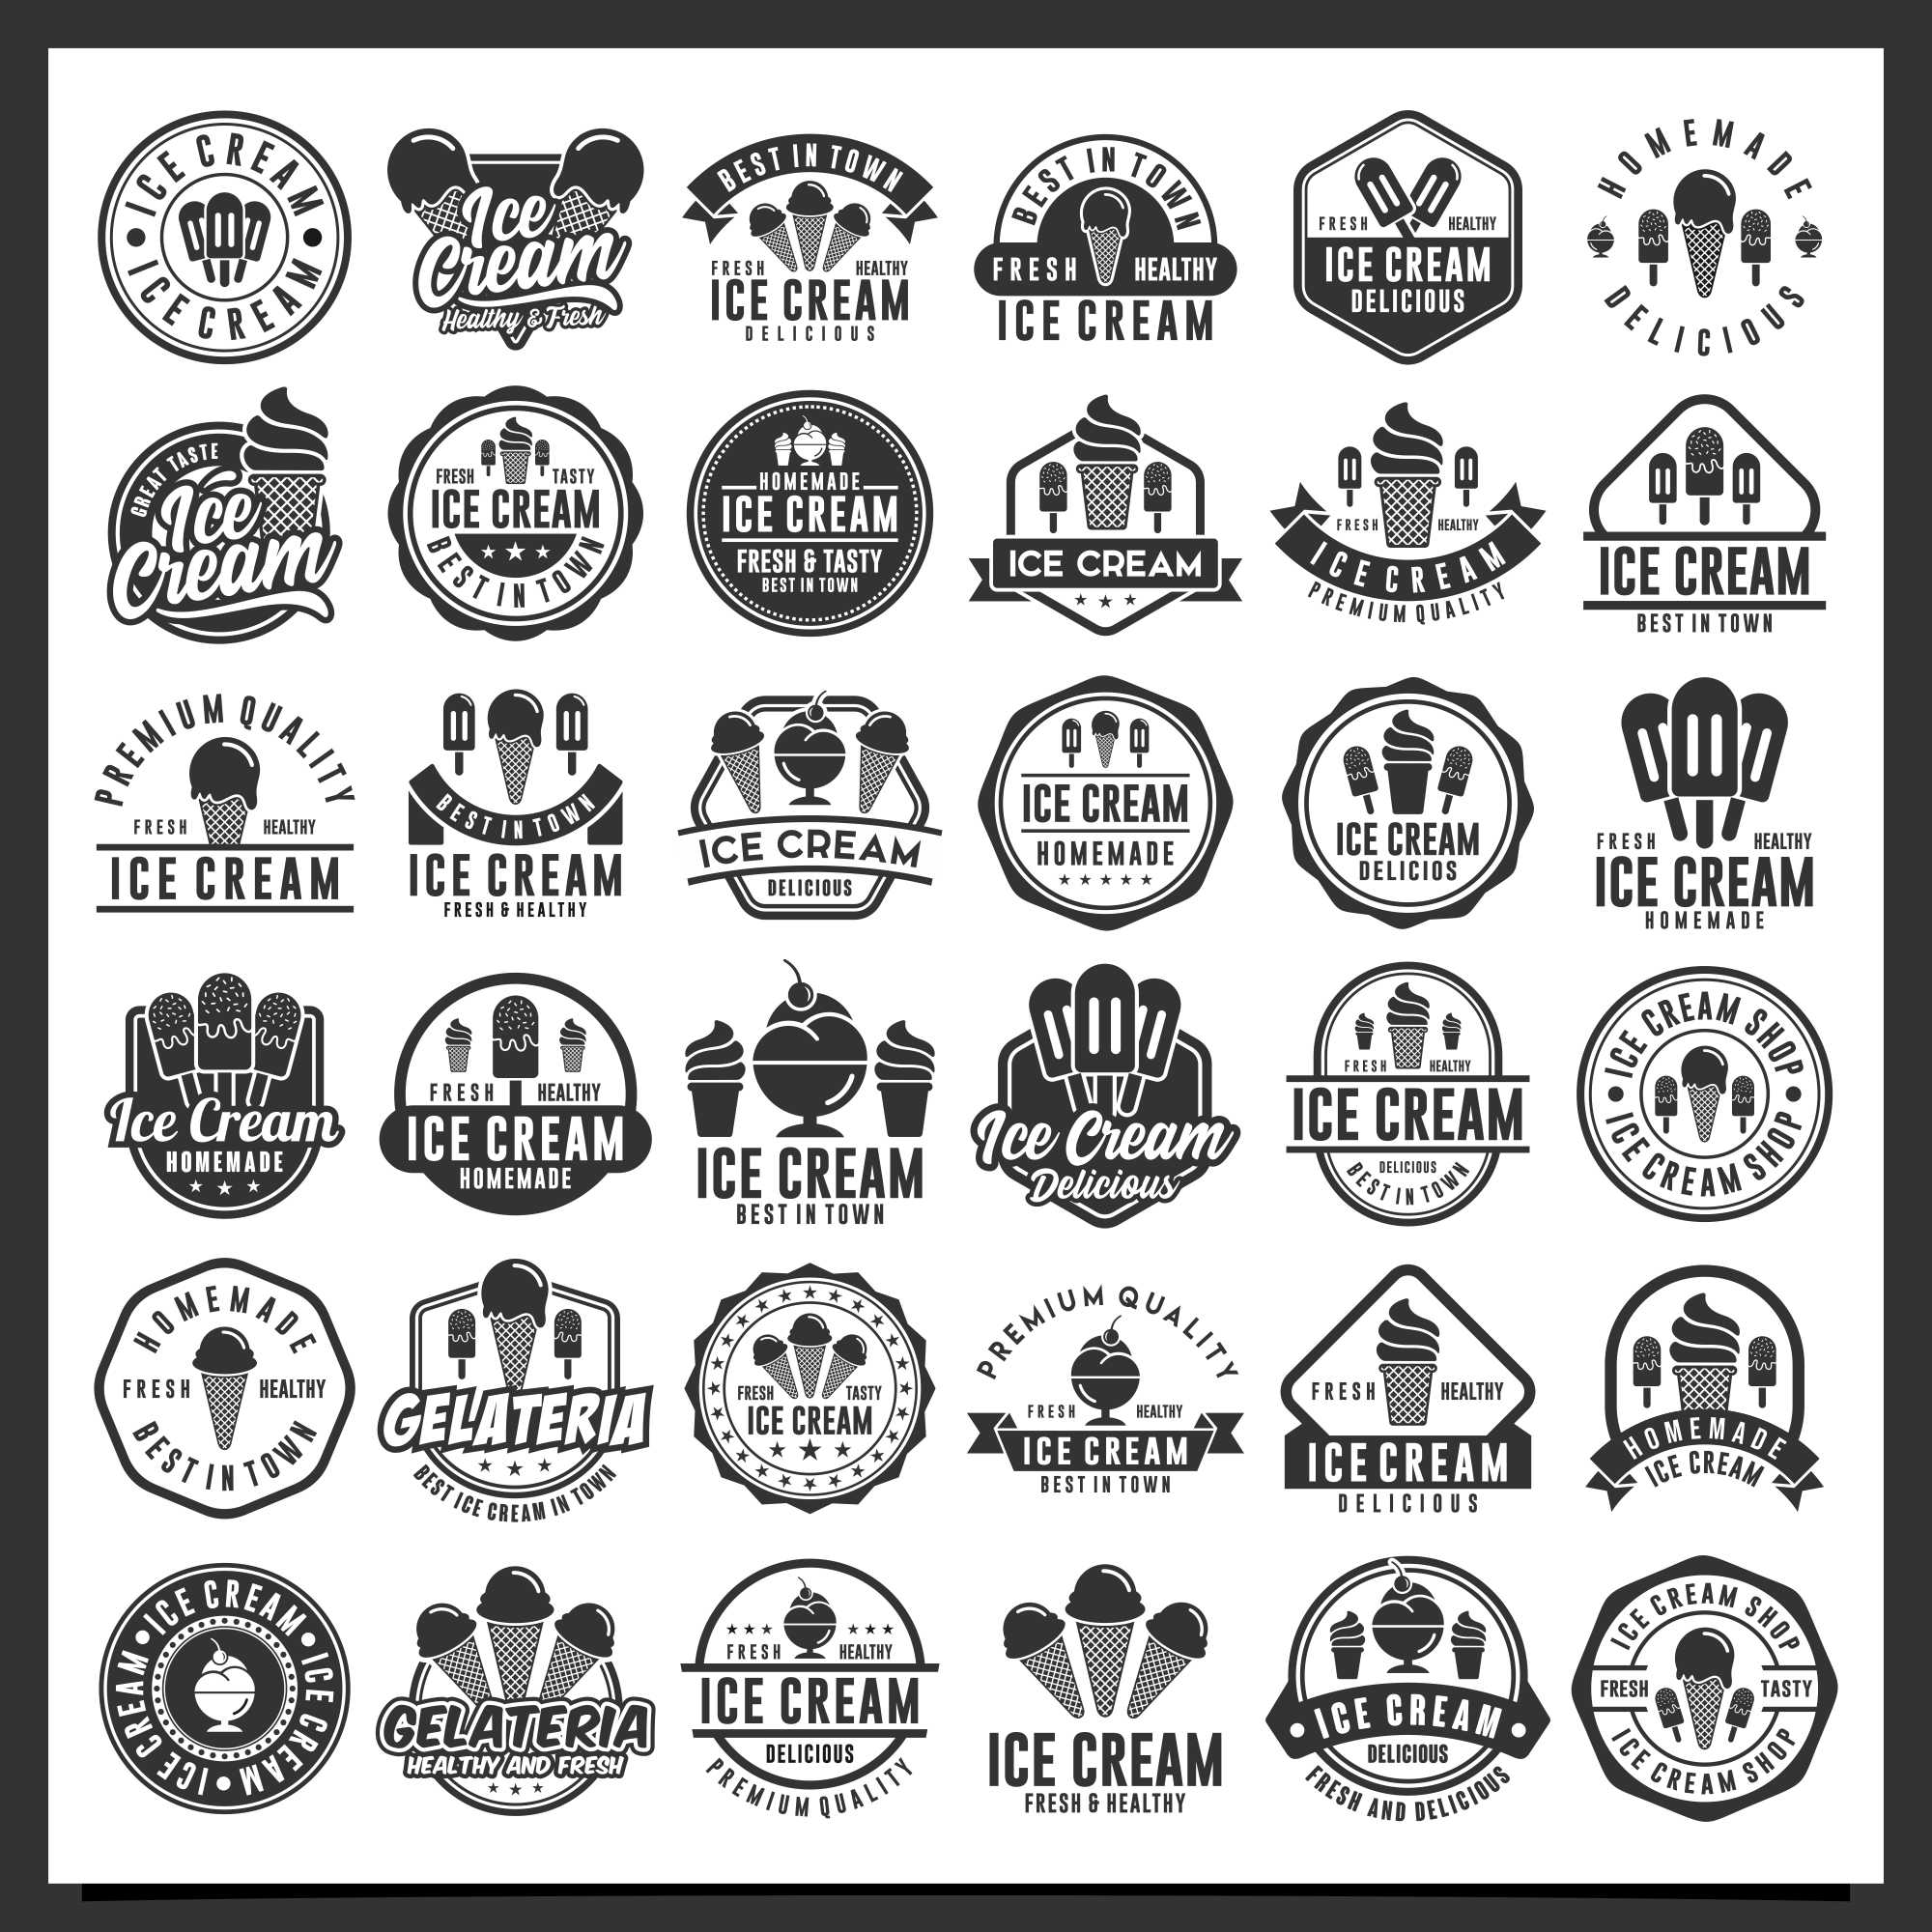 36 Ice cream logo badge design collection cover image.